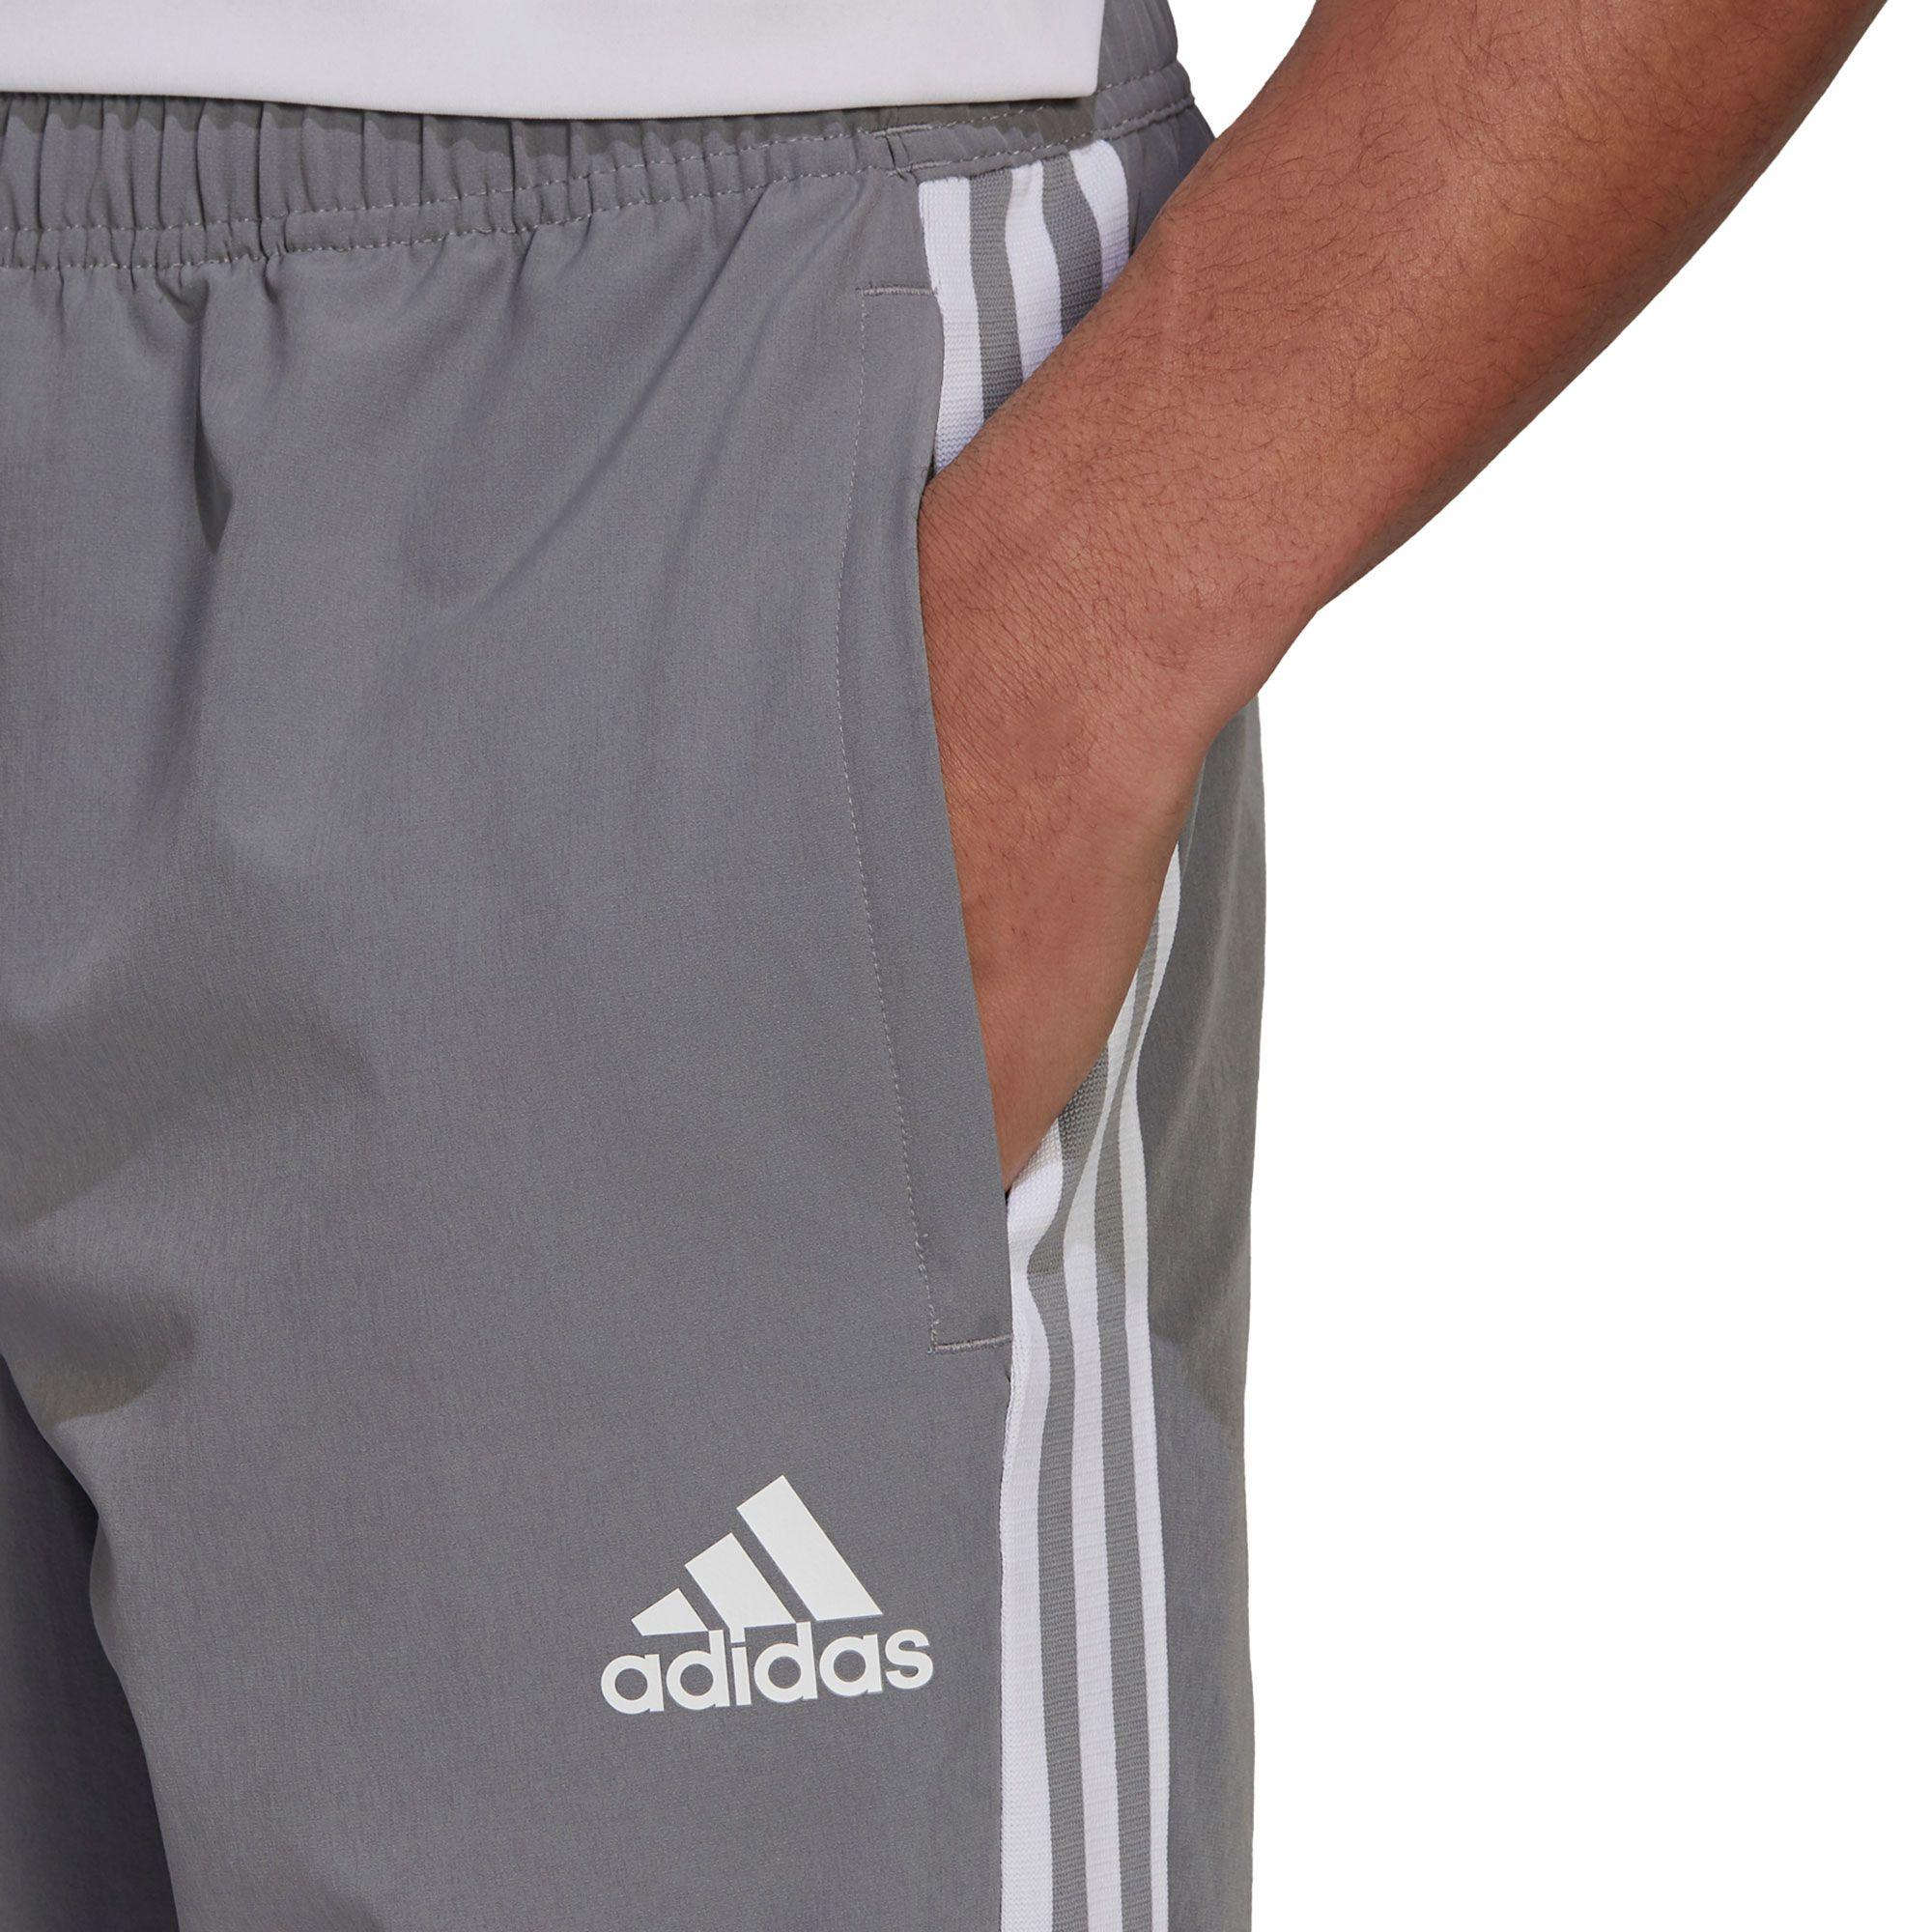 adidas Tiro 21 Woven Soccer Pants in Grey (Gray) for Men - Lyst